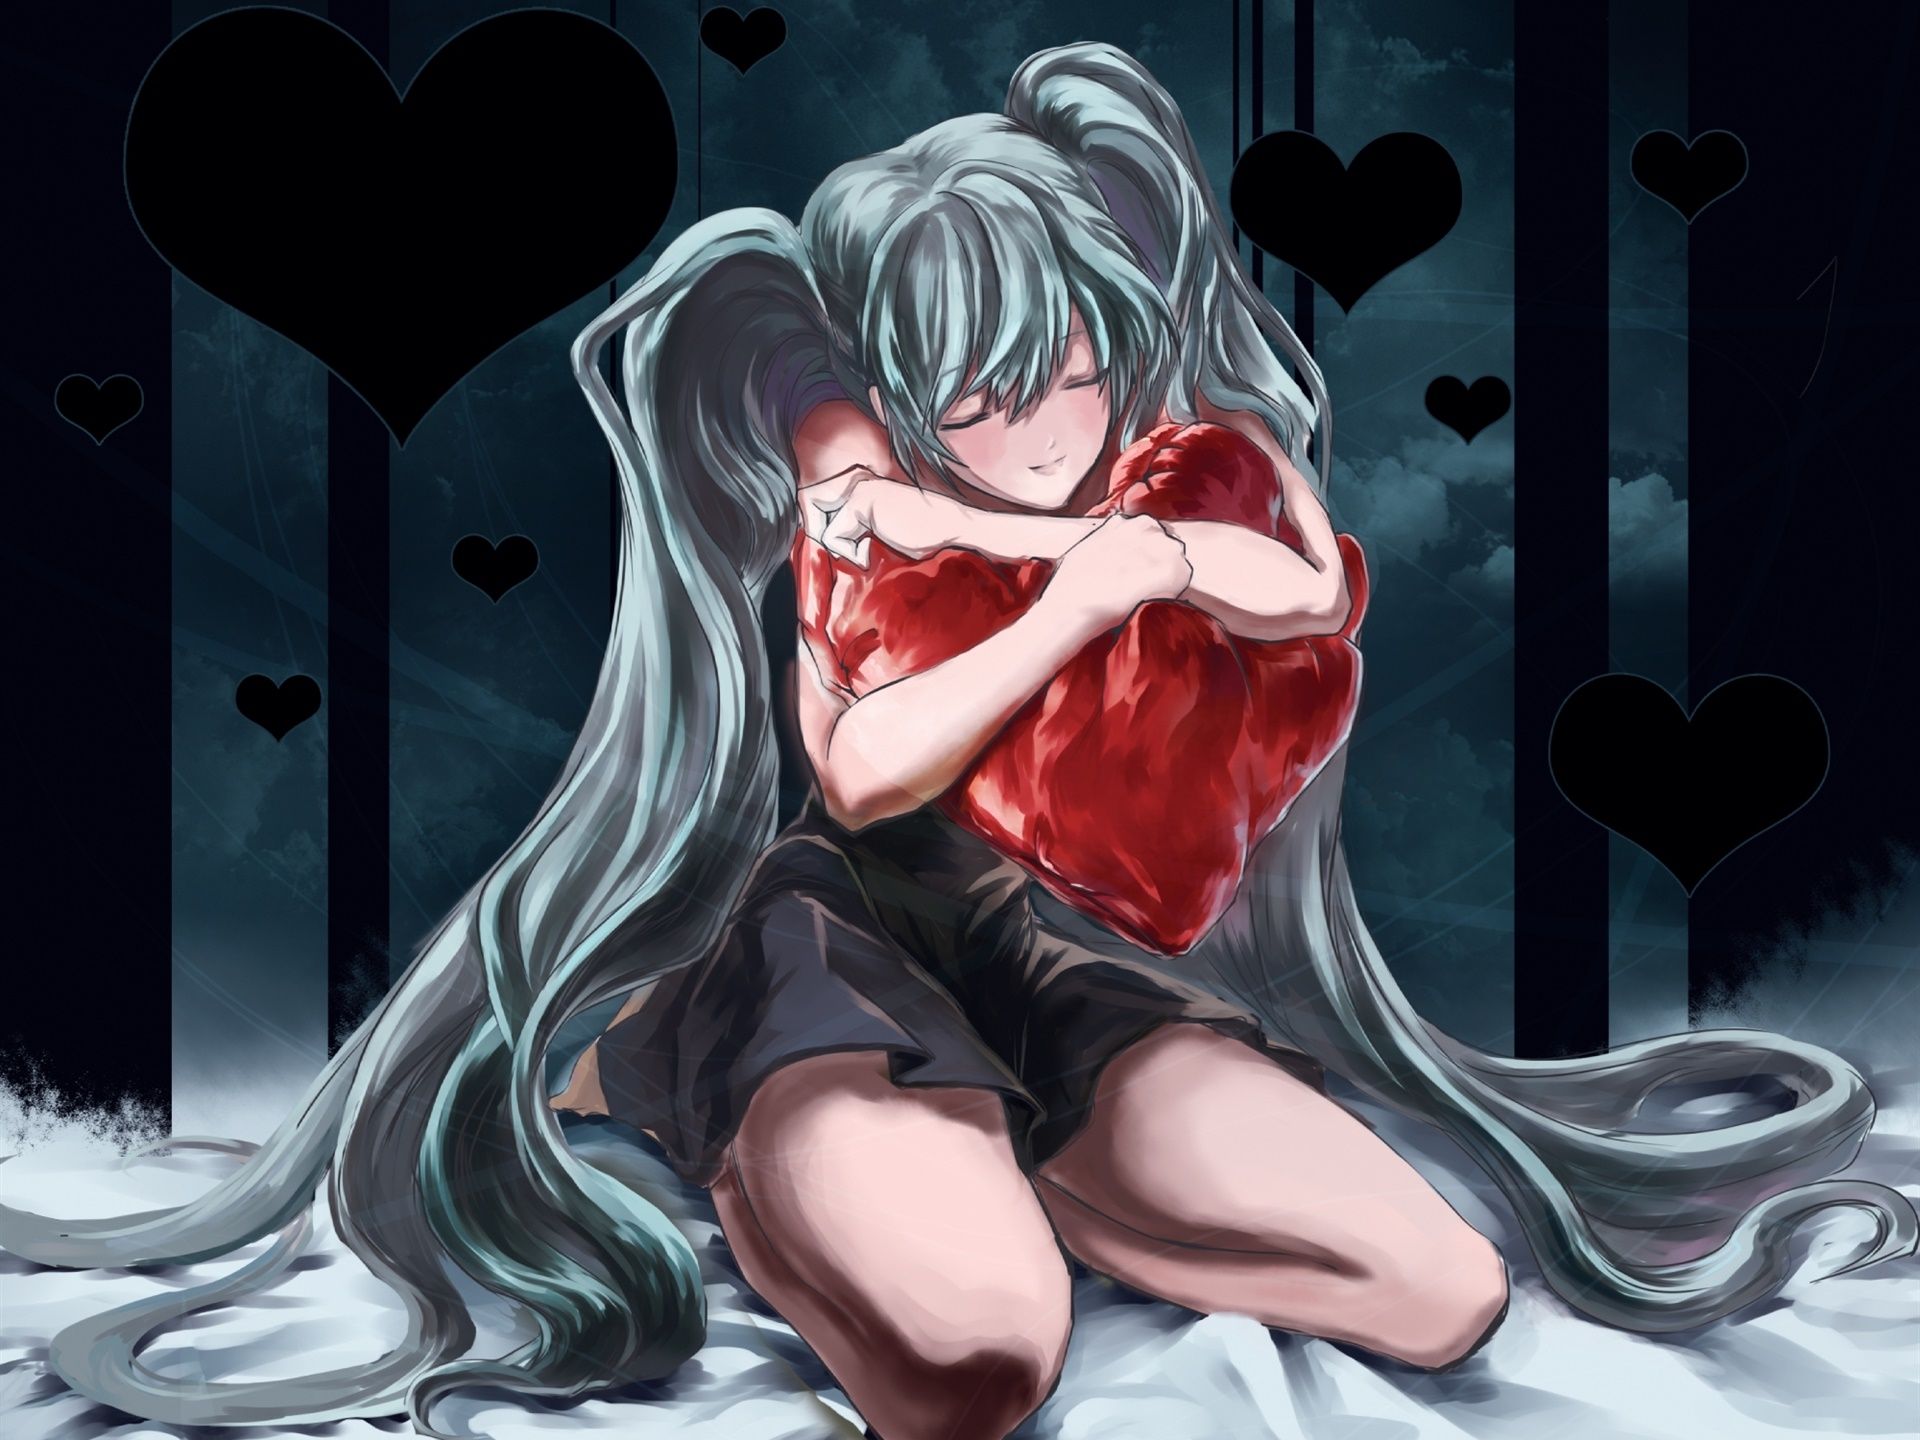 Blue Hair Anime Girl Hugging Heart Shaped Pillow Desktop Wallpaperx1440 Wallpaper Download